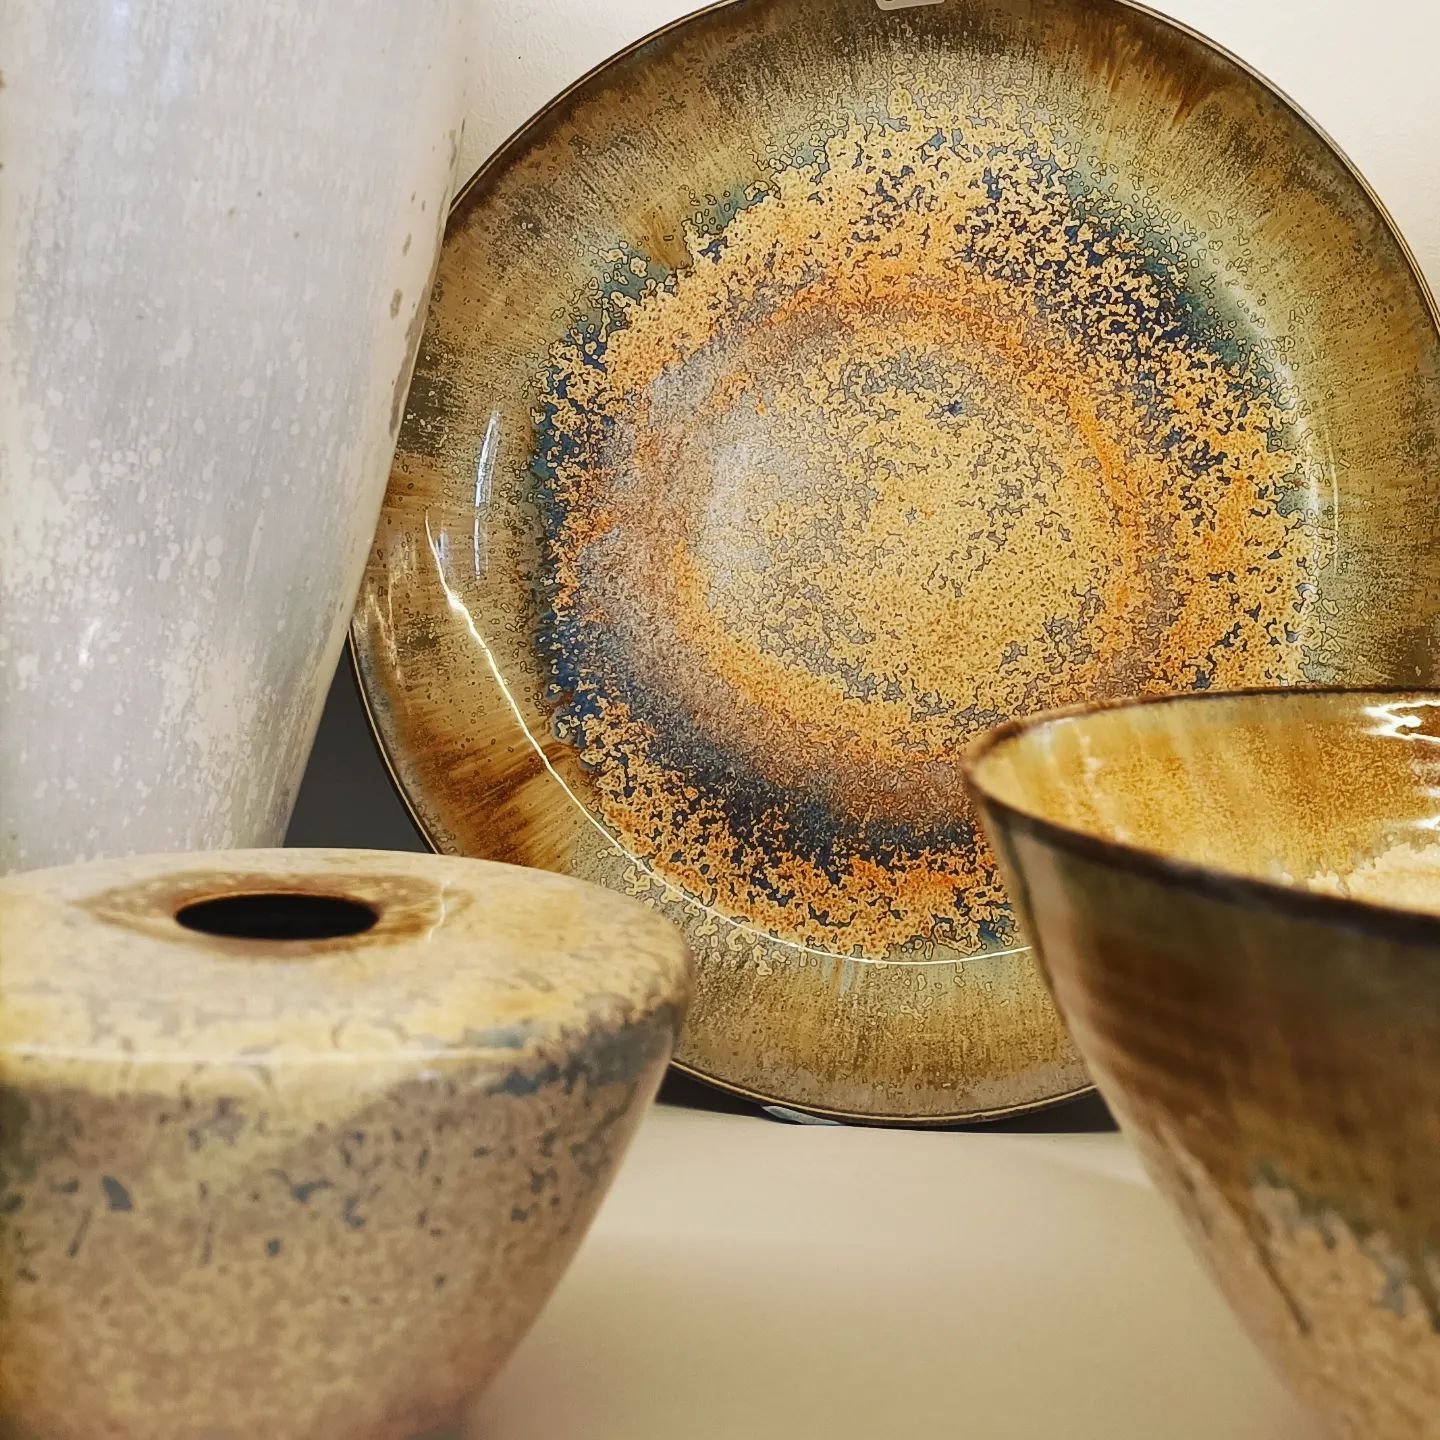 Bonjour le soleil ! #ceramics #keramics #keramick #pottery #potterystudio #handmade #wheelthrown #artisan #artisandesign #bowls #dish #vase #stoneware #glaze #sun #sunshine #orange #clay #lifestyle #pottersofinstagram #ceramicart #handmade #servies #geschirr #tableware #haarlem